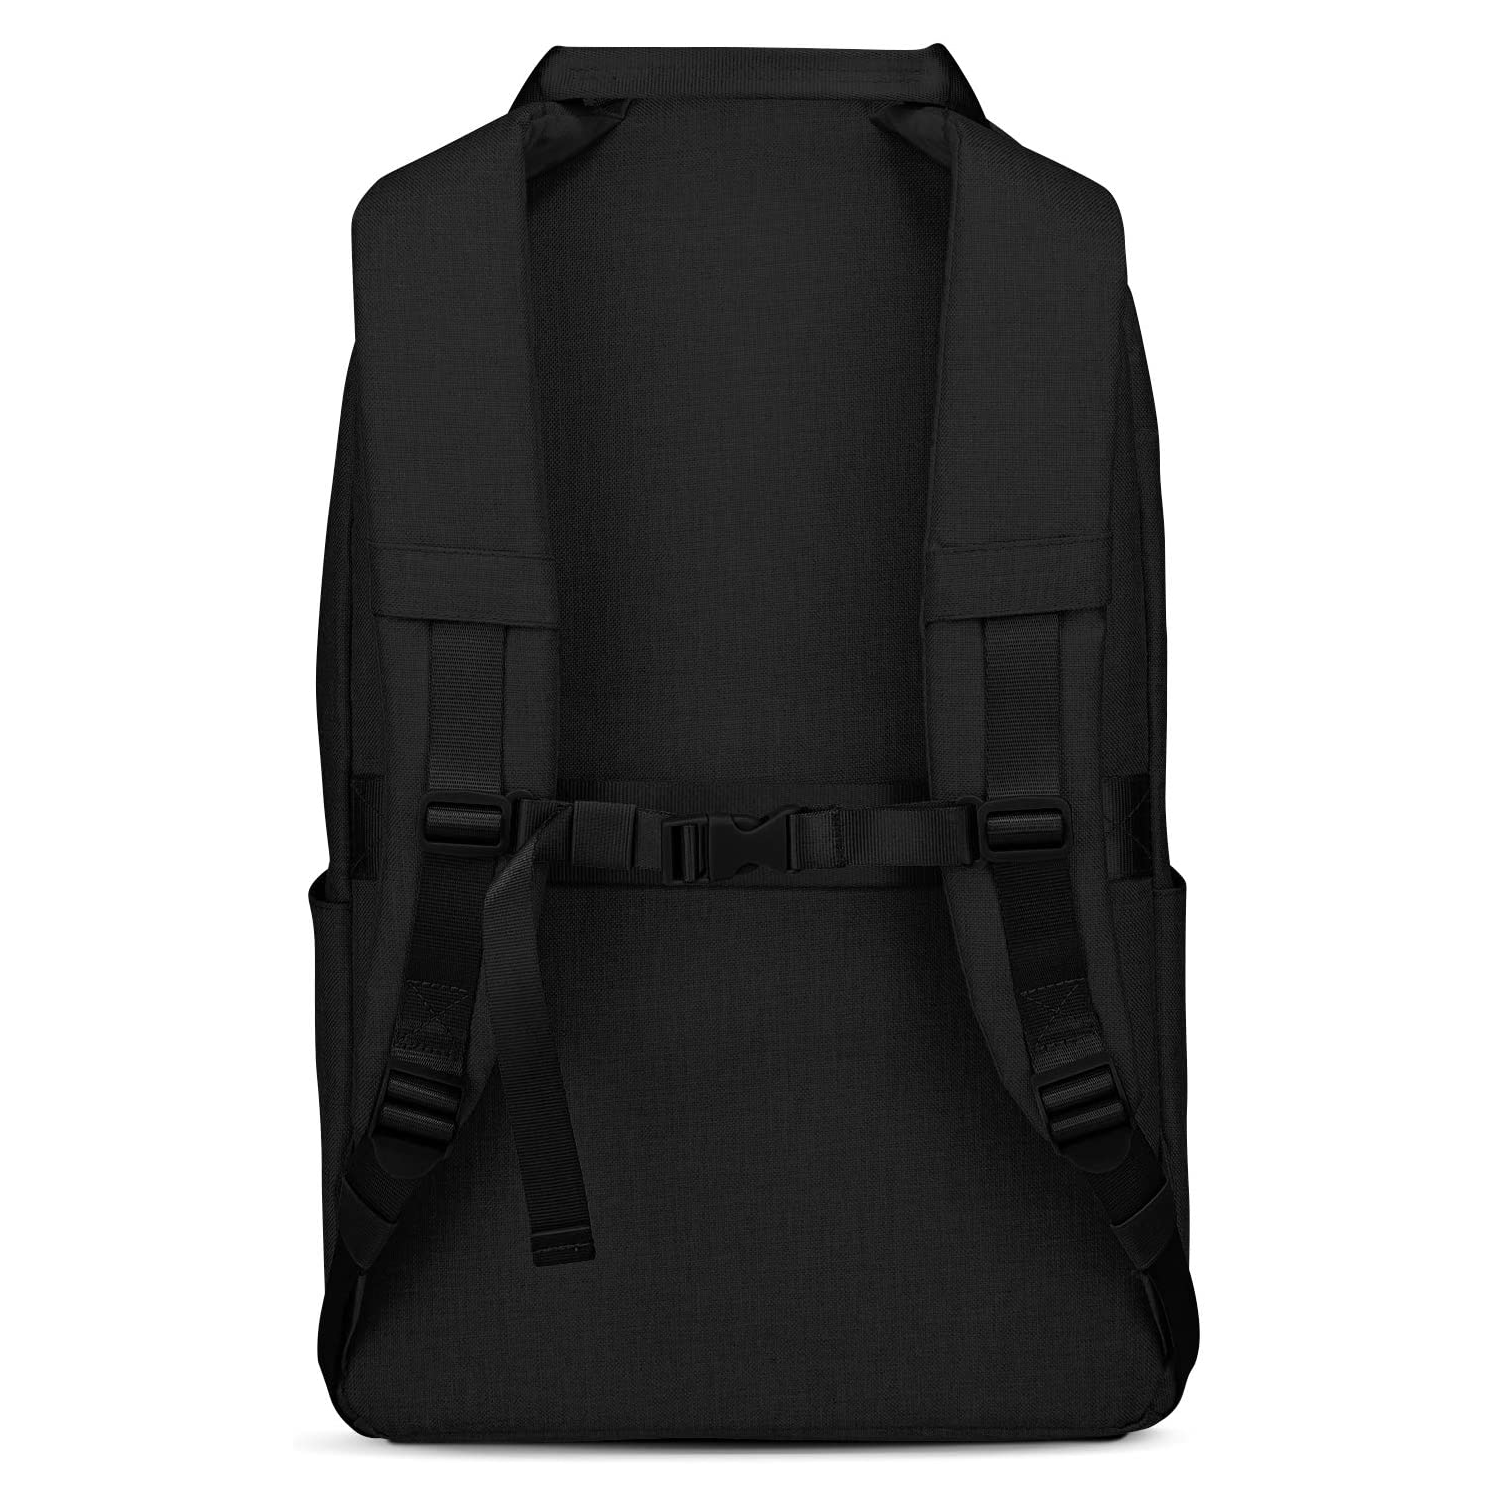 Simple Modern Legacy Backpack Slate Grey 25L